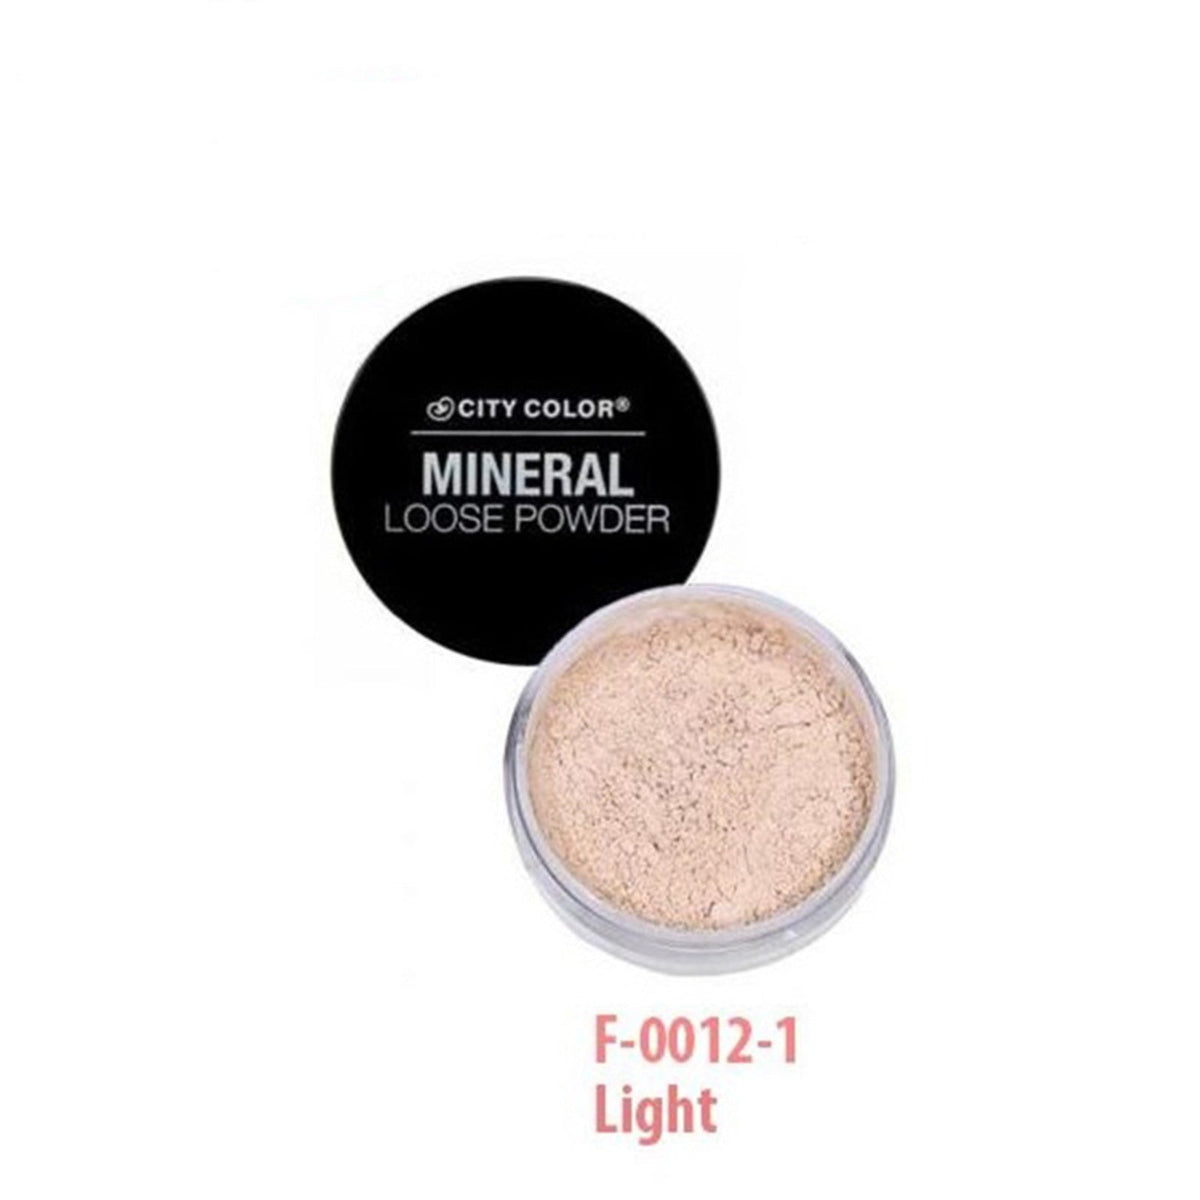 City Color Mineral Loose Powder - Light to Medium Skin Tones Talc.